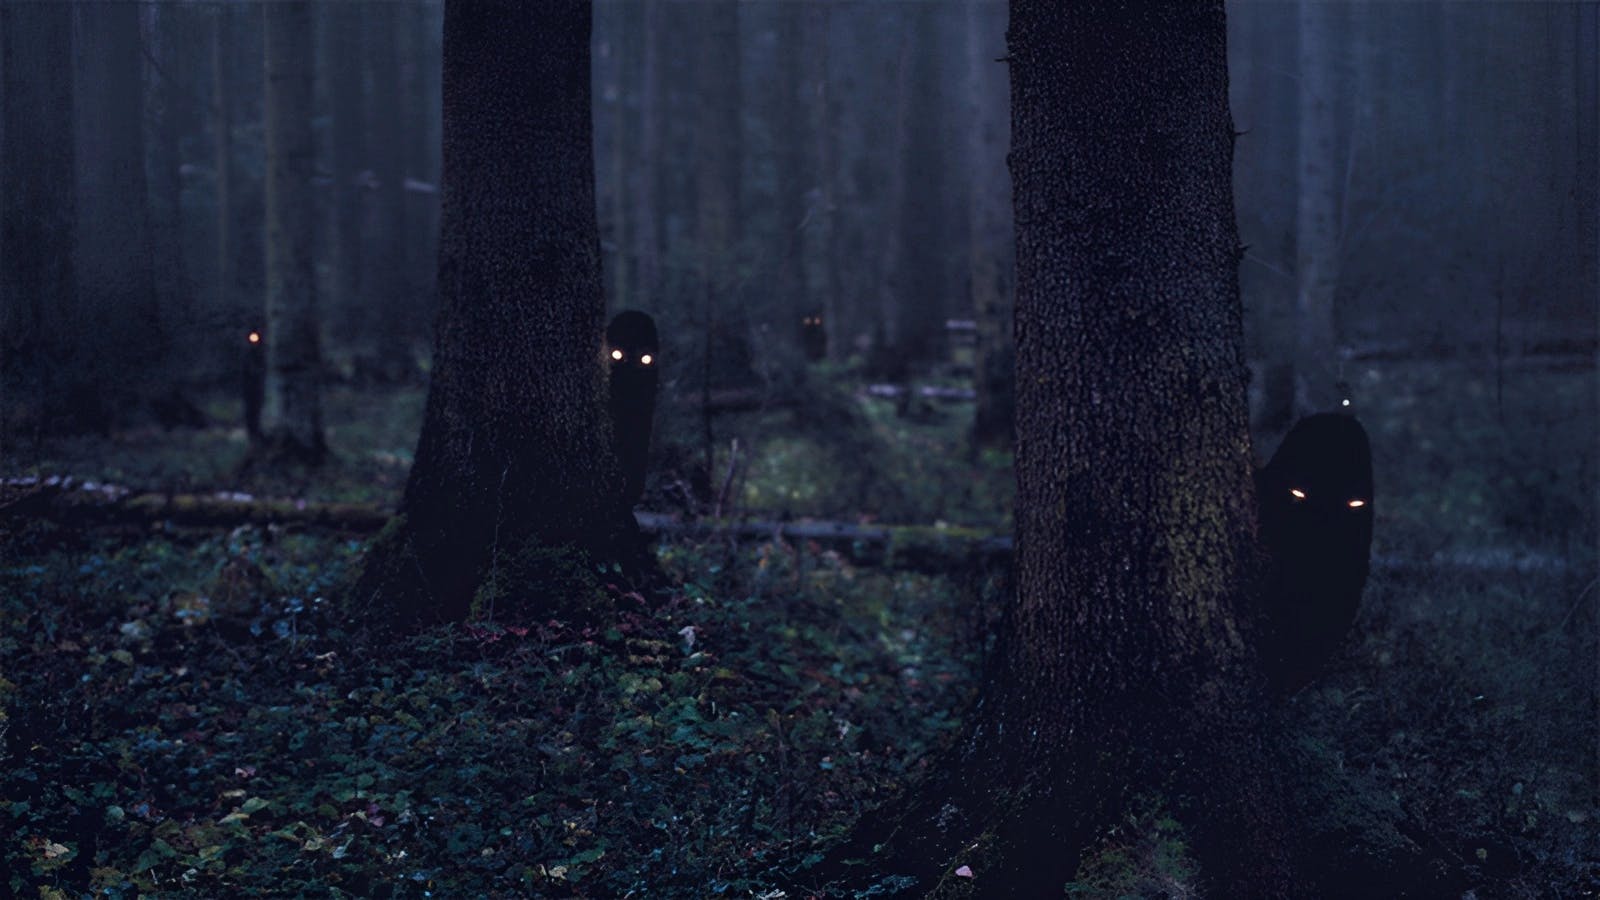 Dark scene. Темный лес the Woods 2005. Лес призраков (the Forest), 2015. Темный лес с призраками.